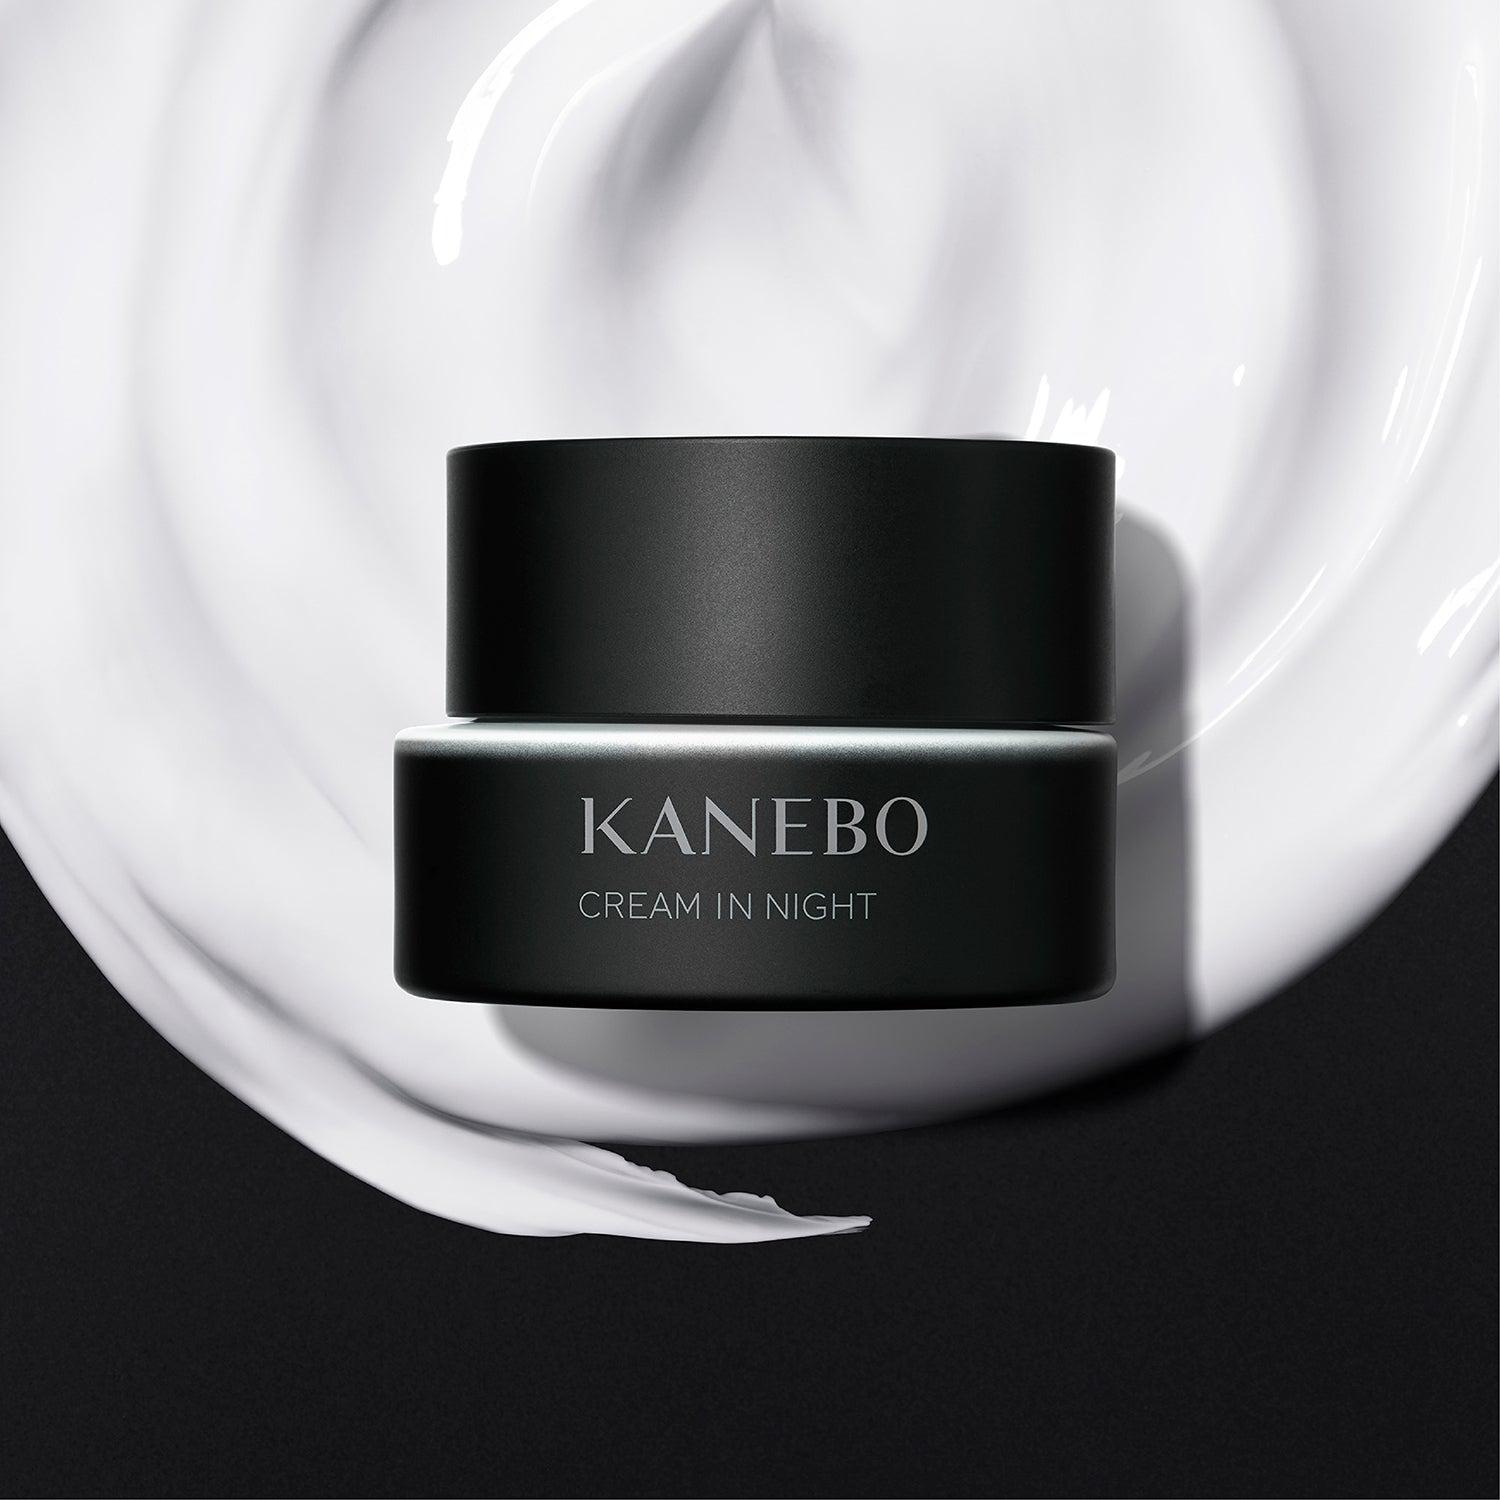 Kanebo Cream In Night Face Cream for Night Skincare Routine 40g